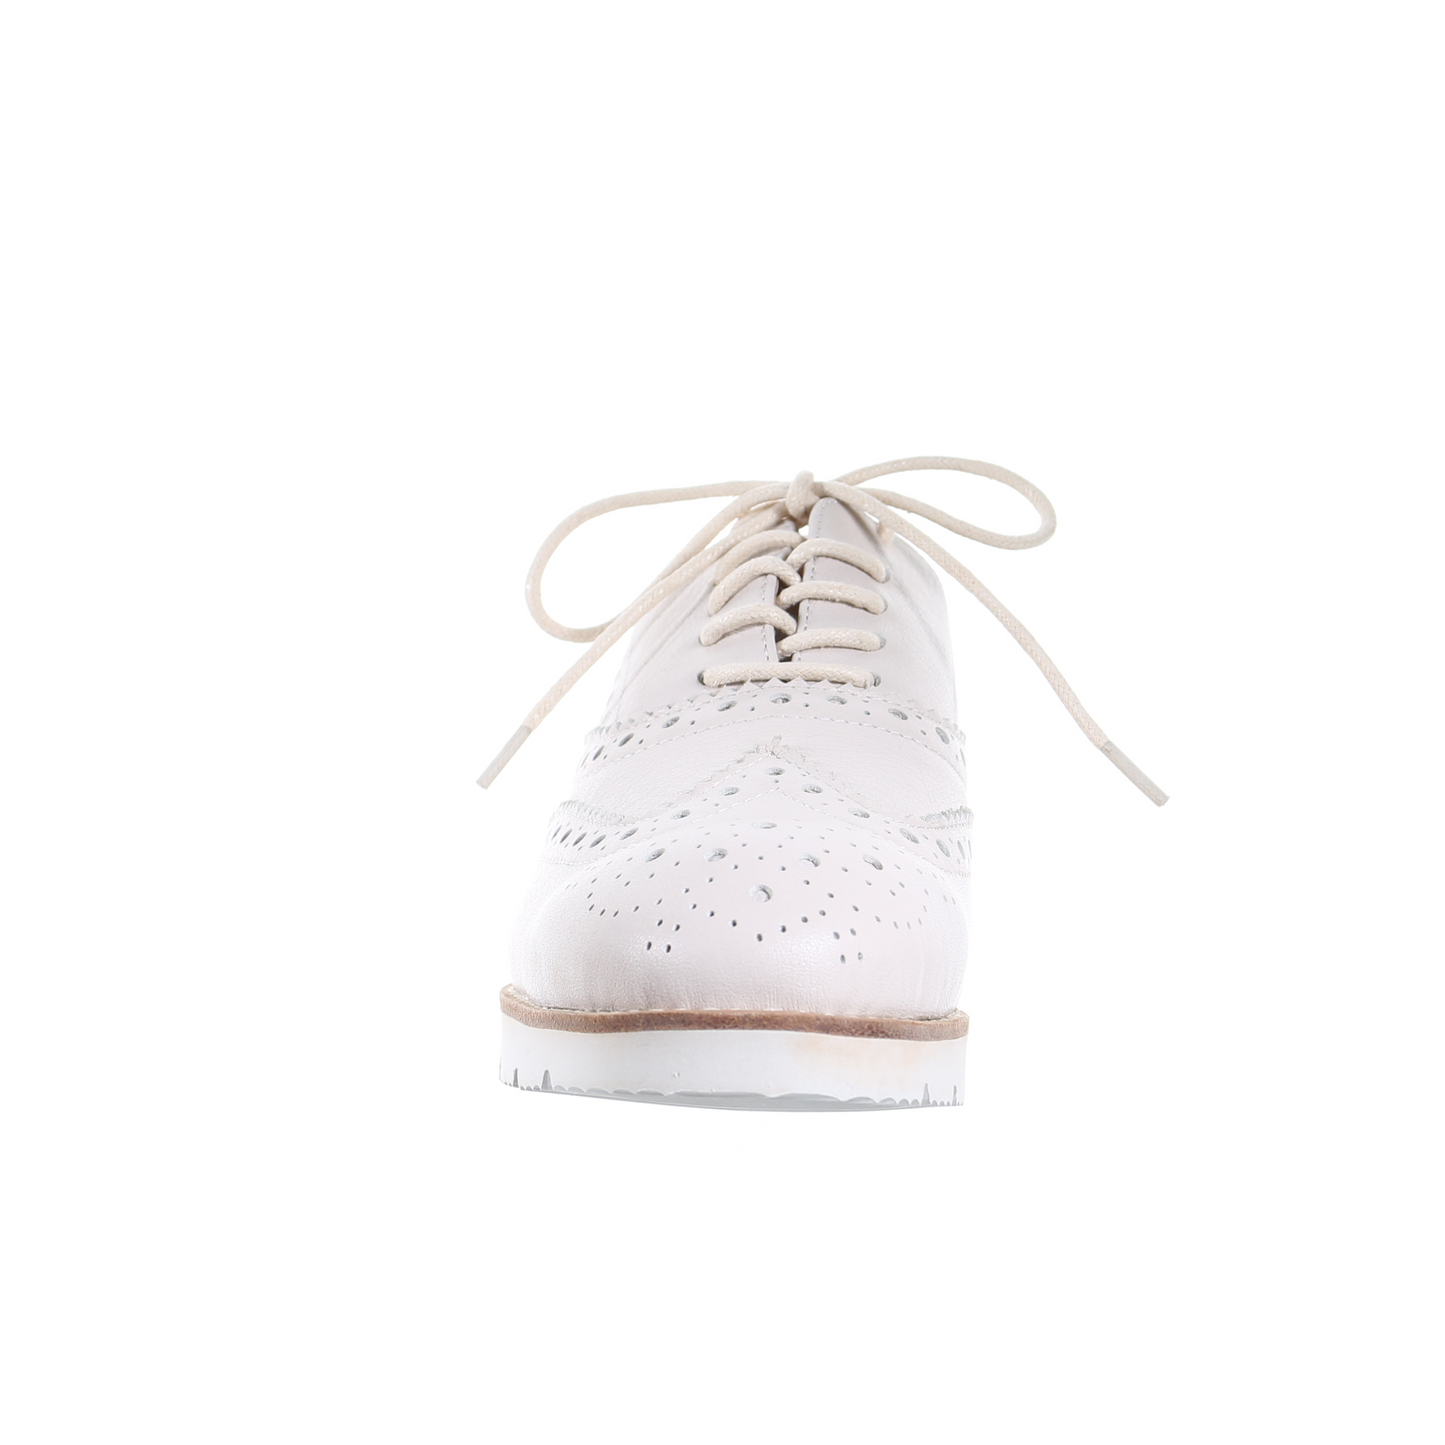 Oxford Shoes (White)